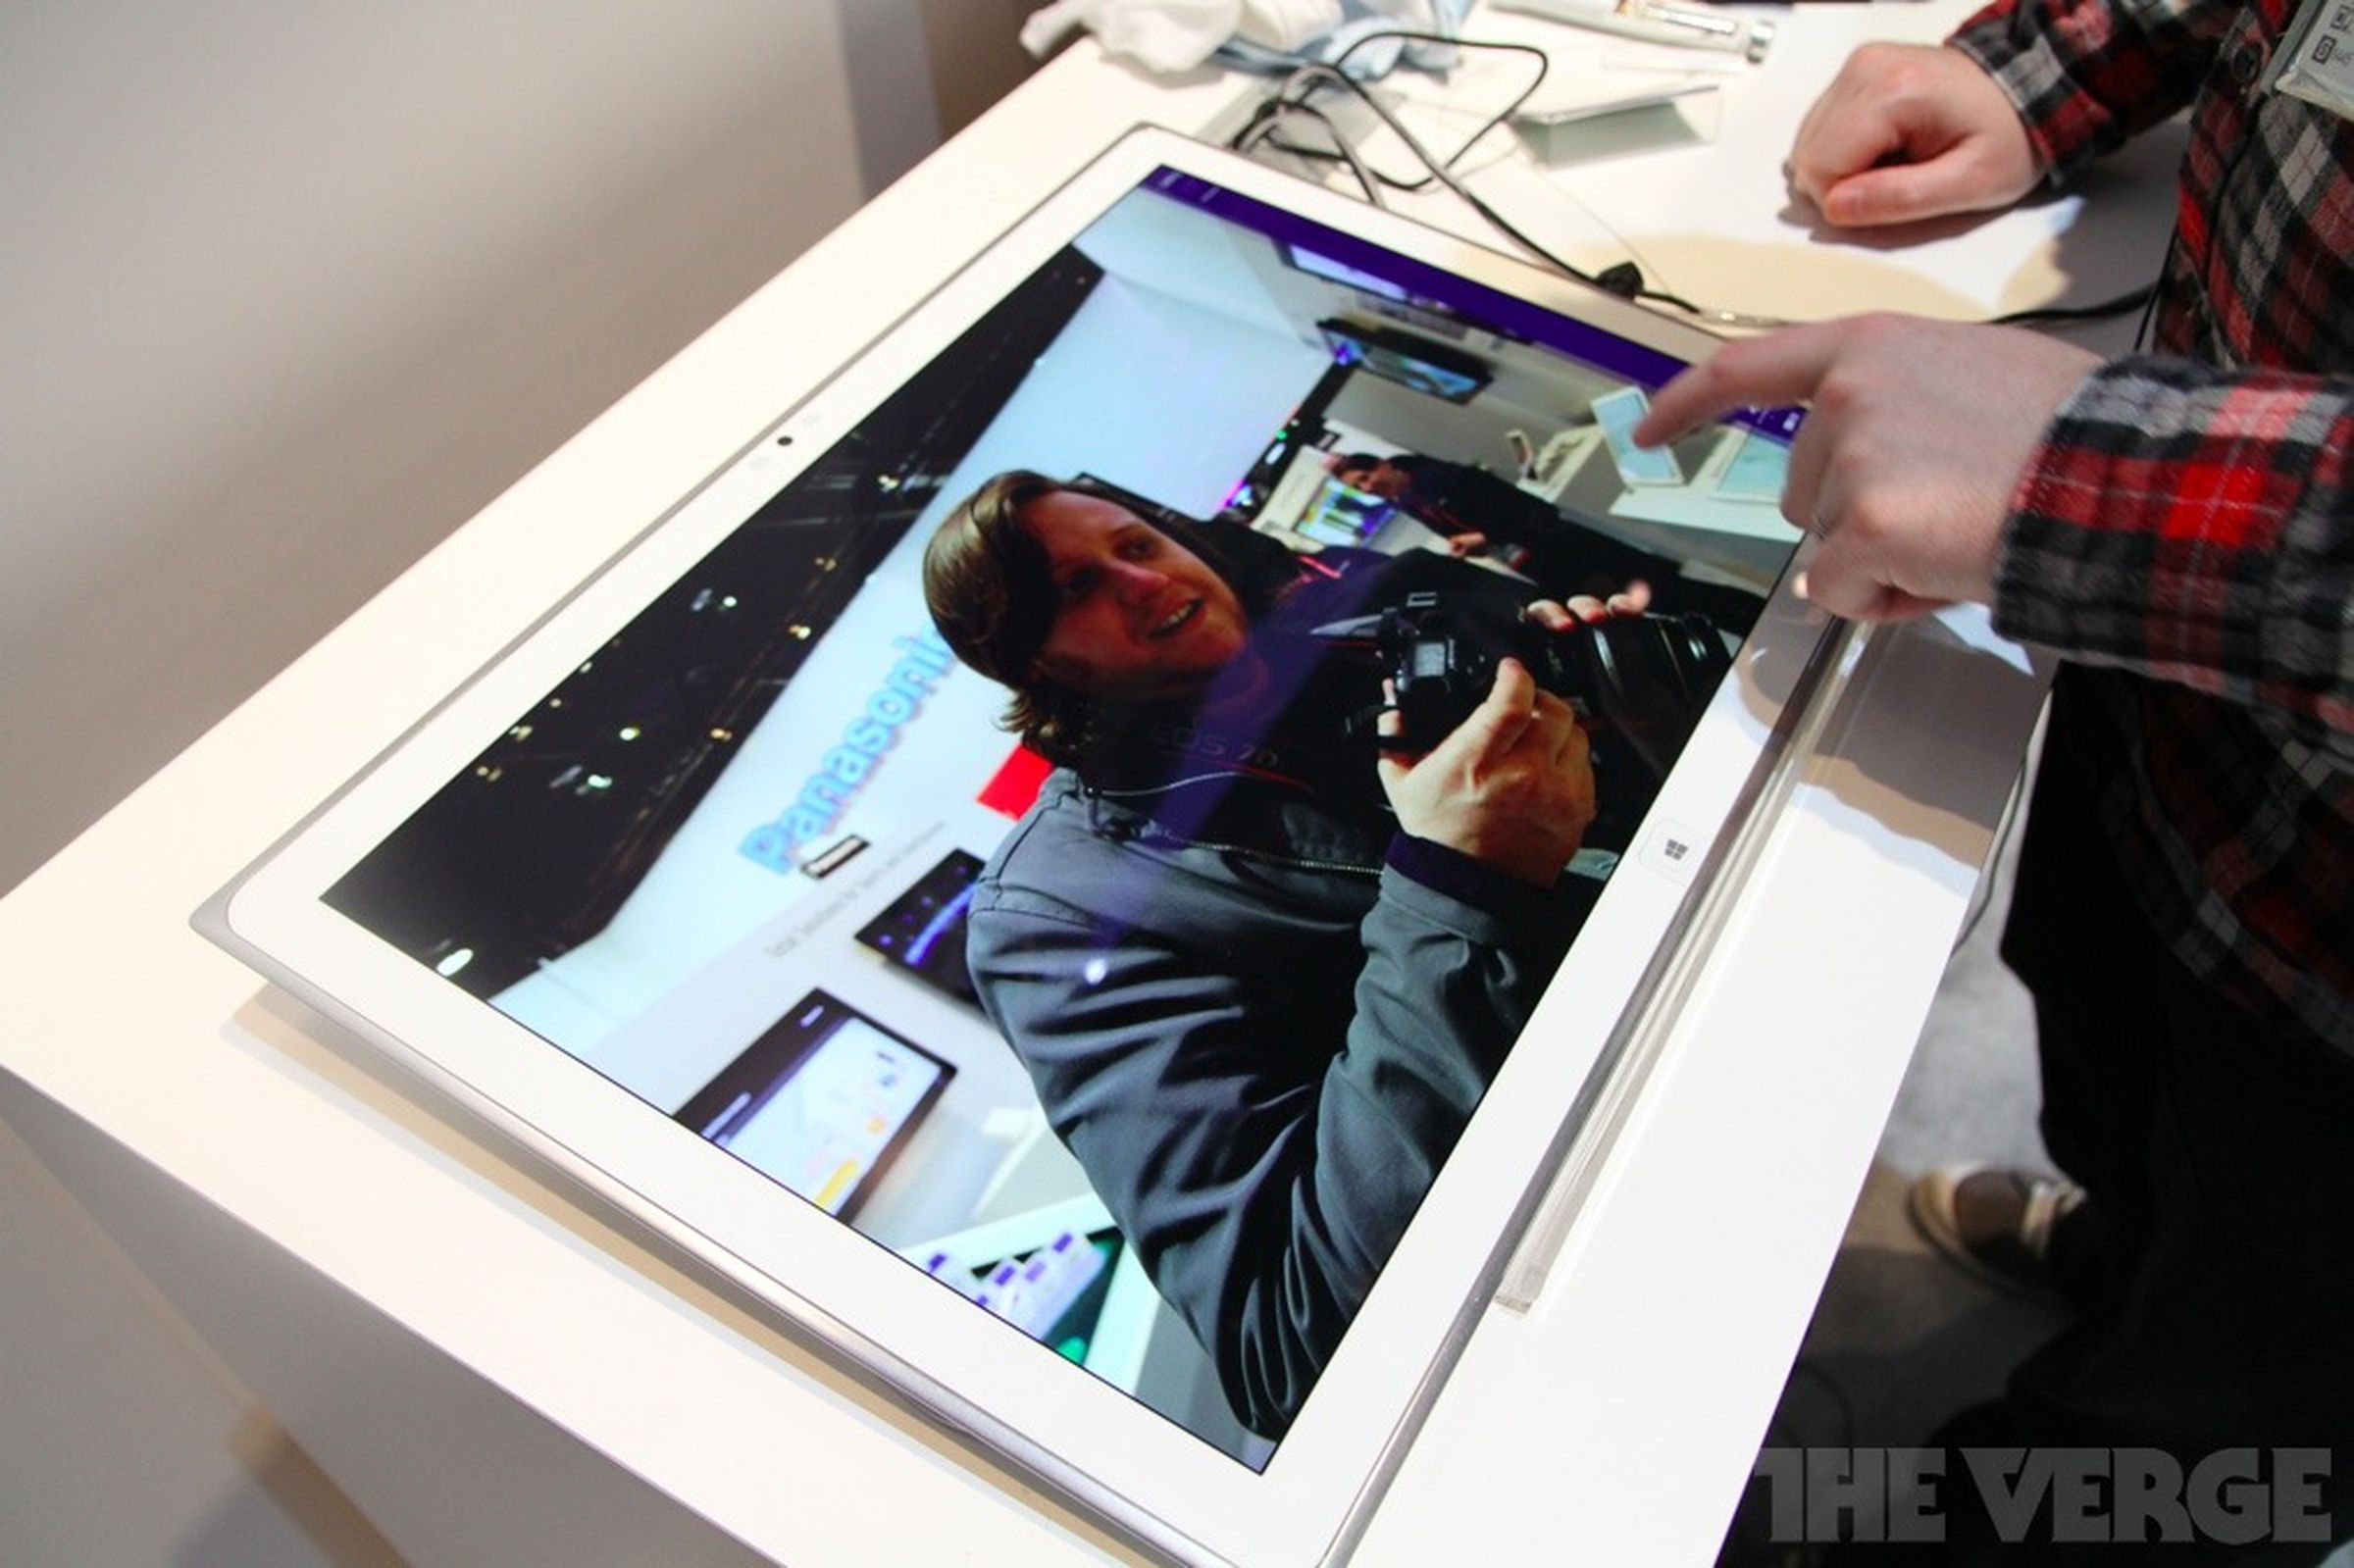 Panasonic 4K Windows 8 tablet hands-on photos